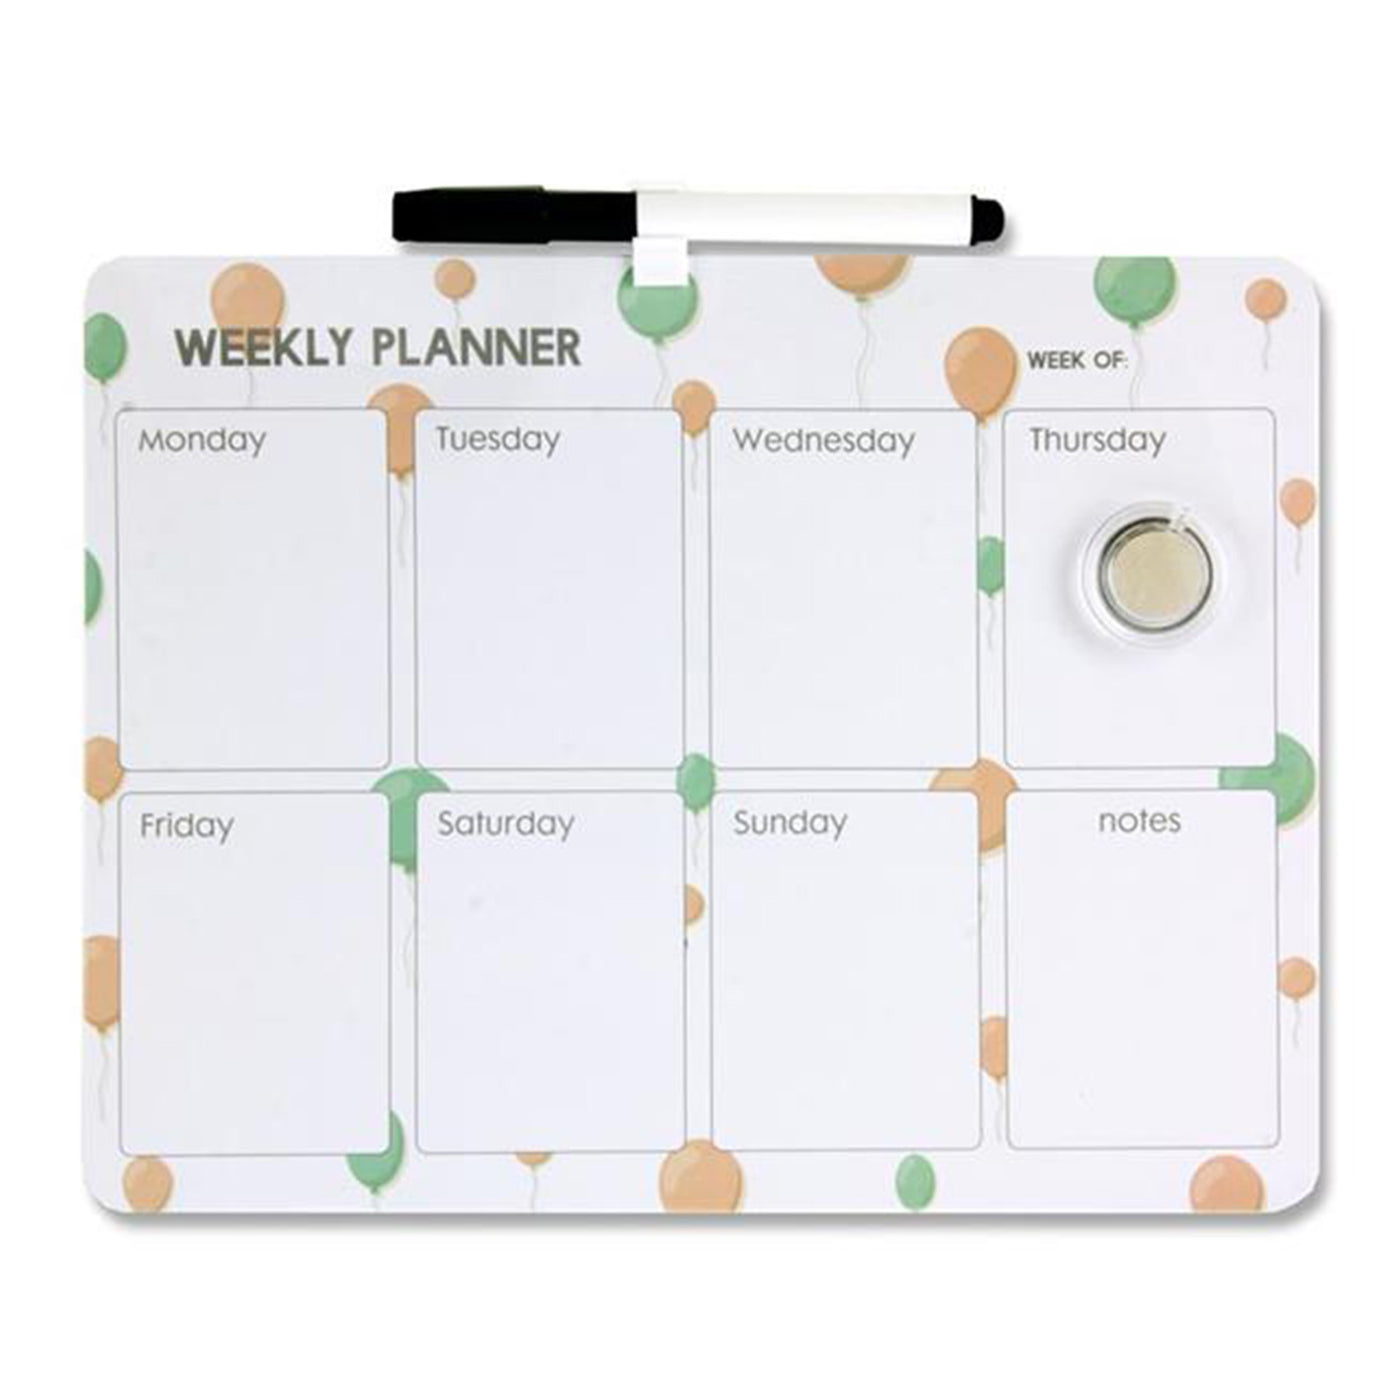 Diaries & Planners